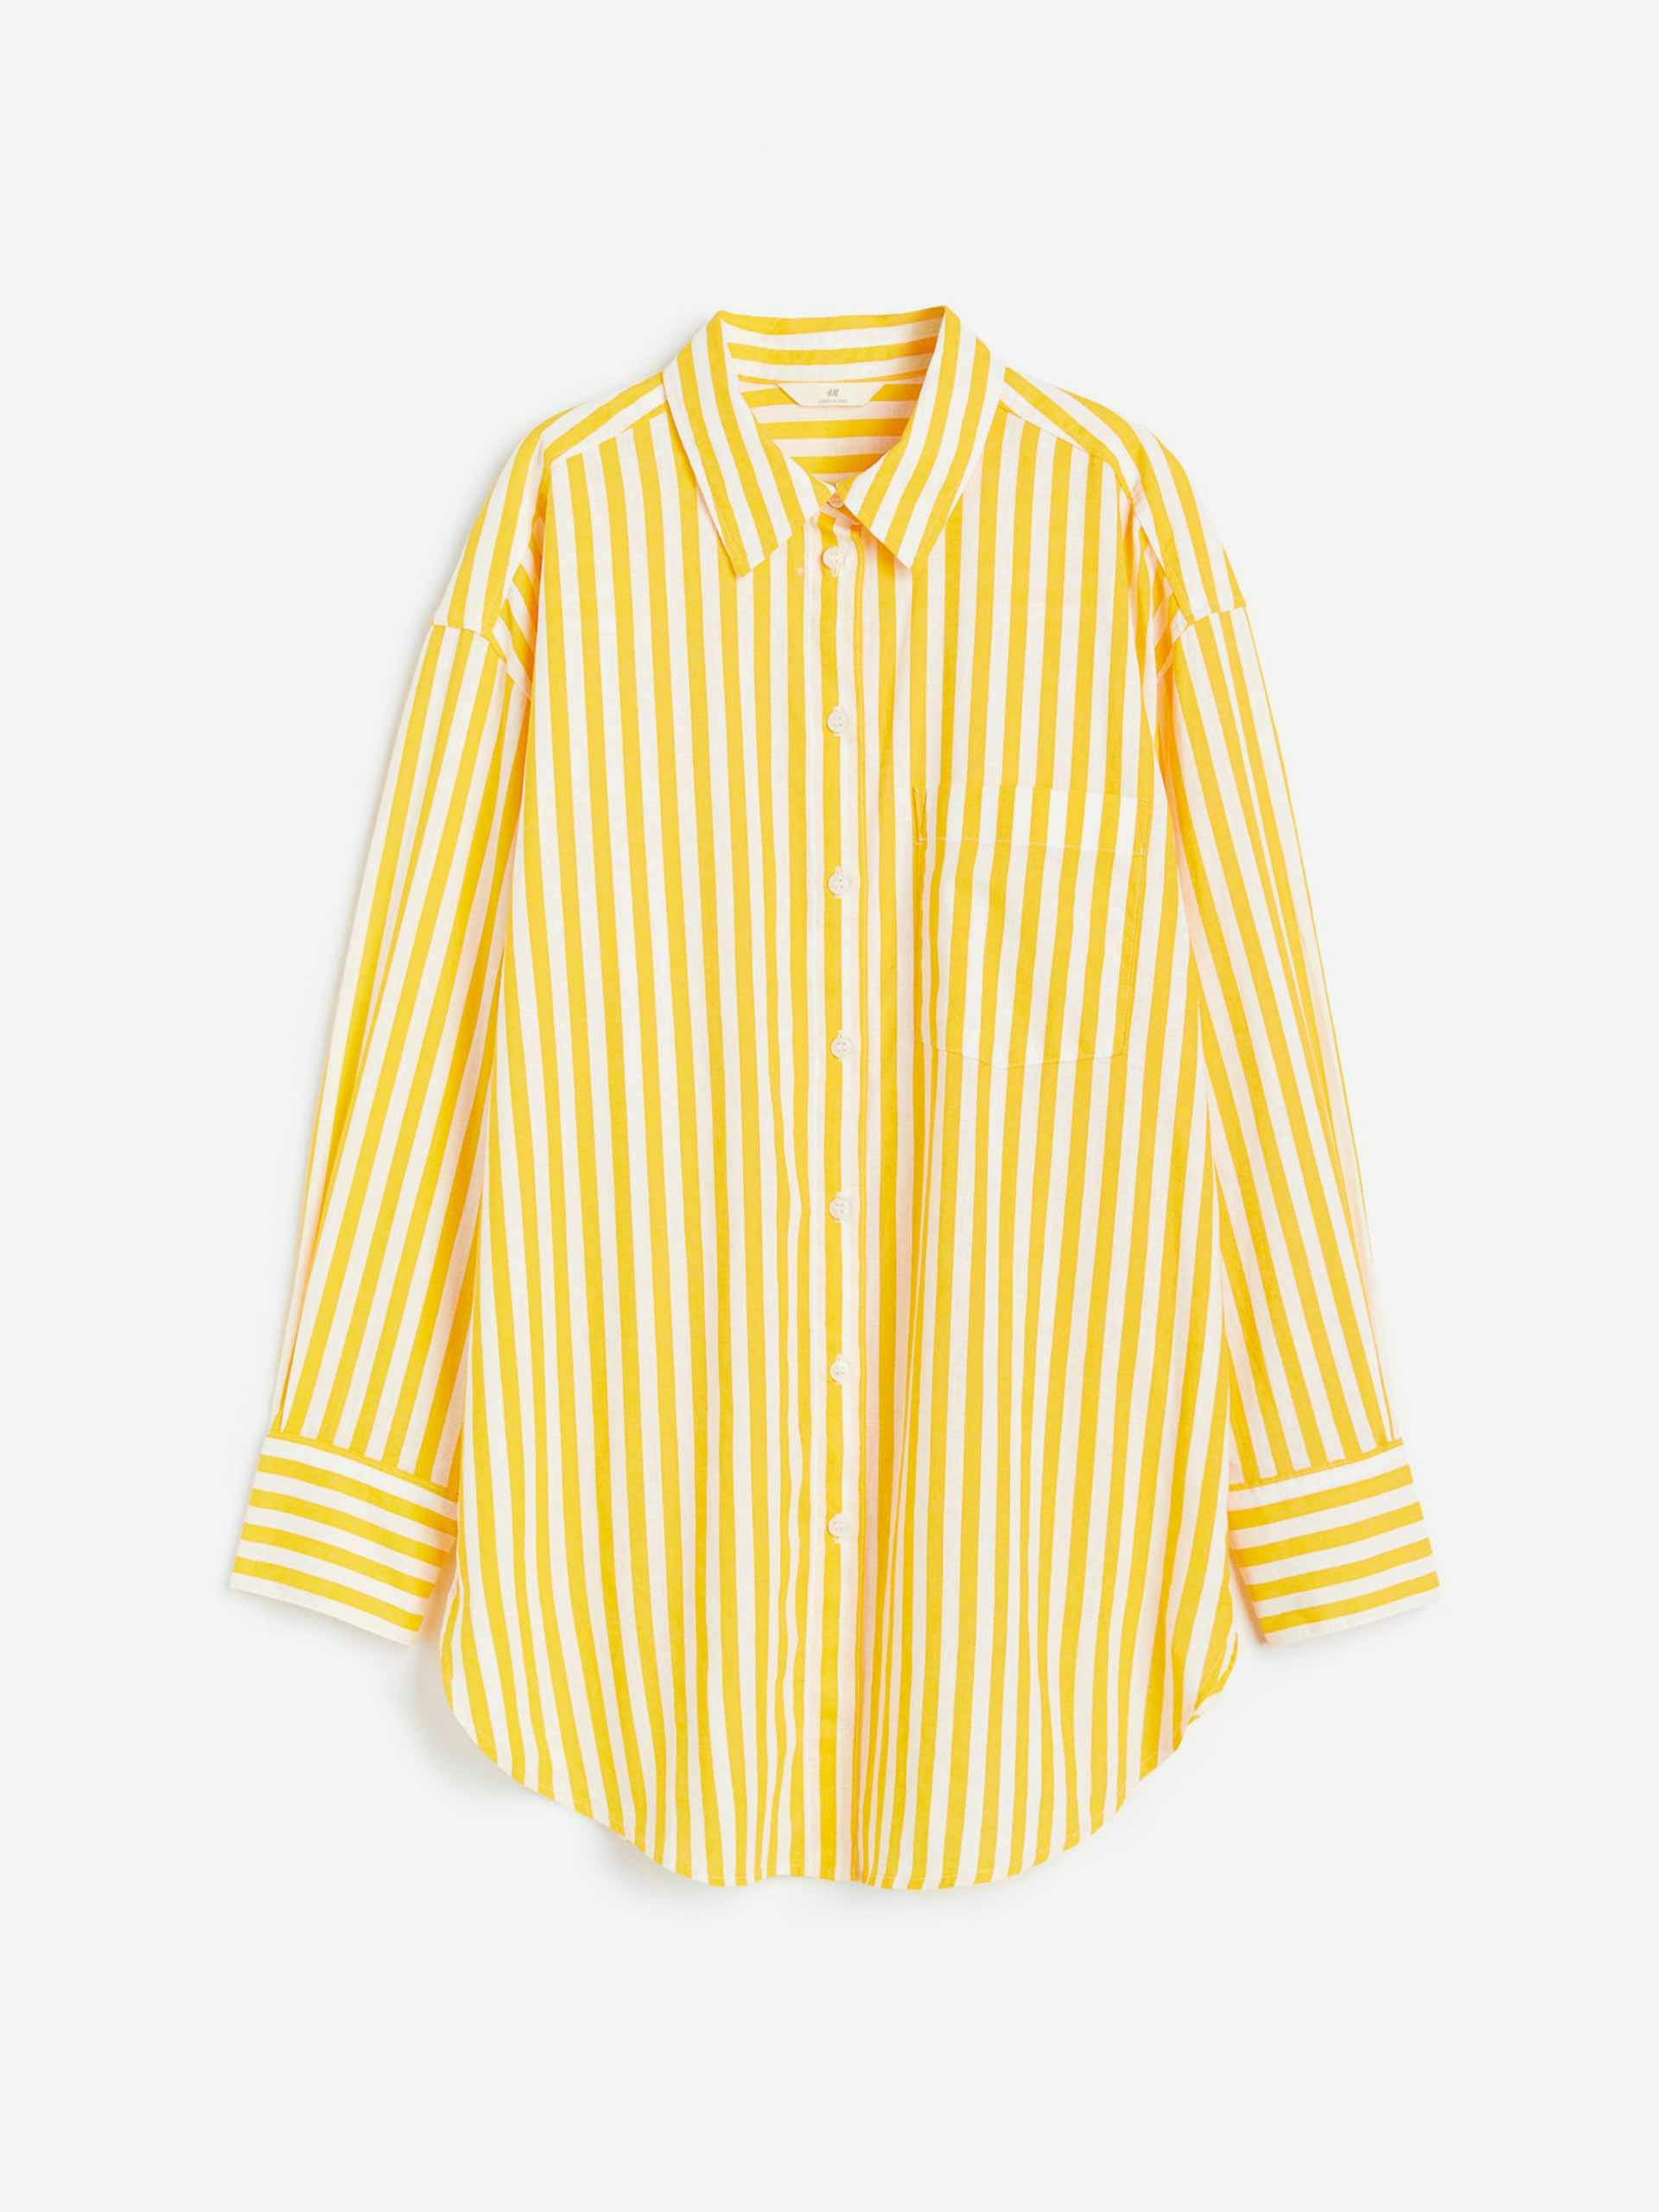 Yellow and white striped shirt